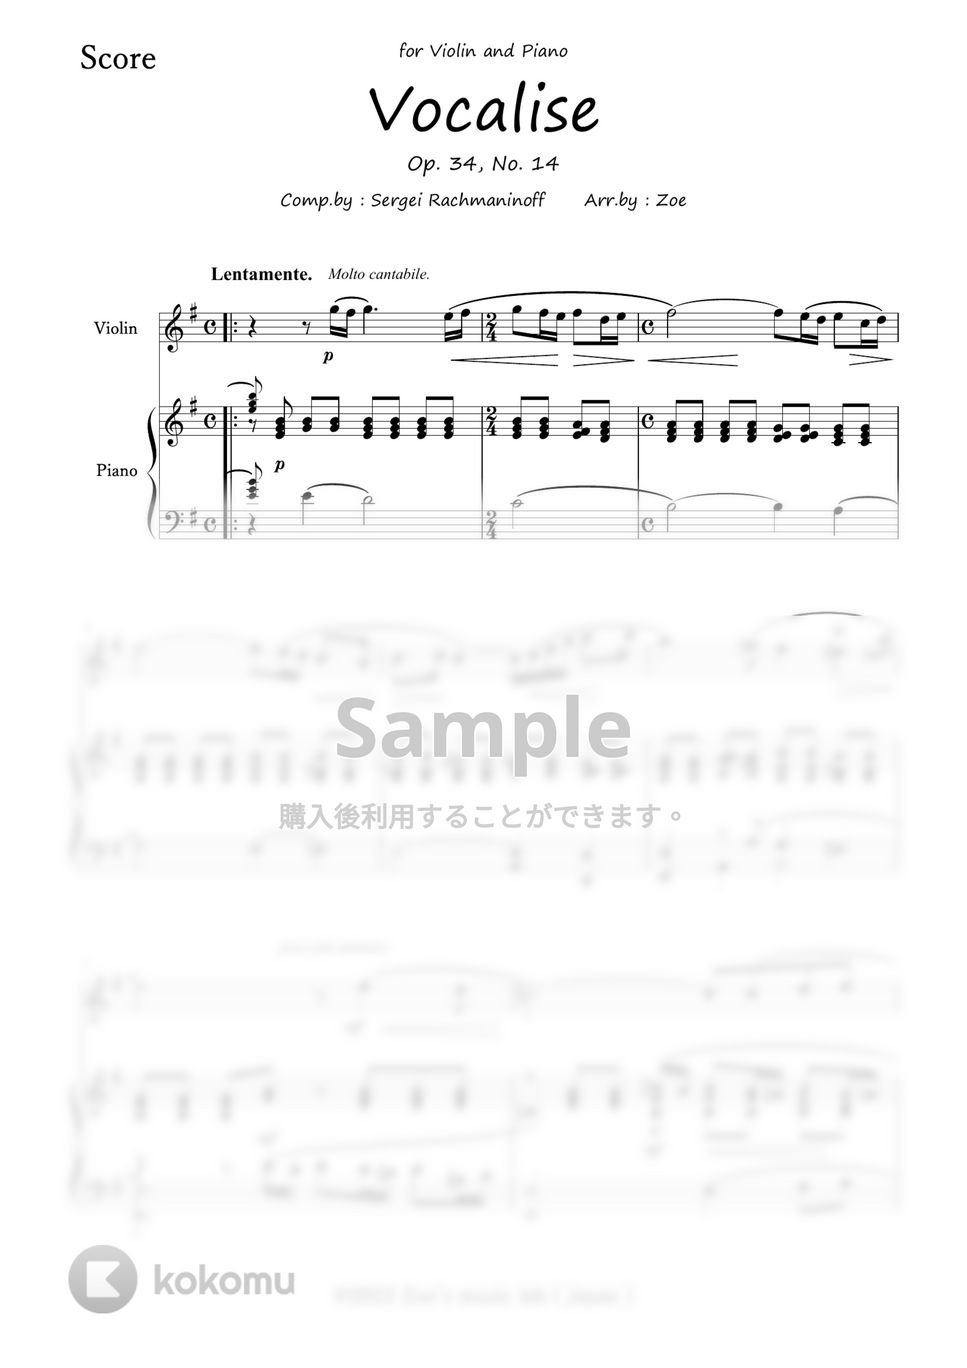 Rachmaninoff - Vocalise Op.34,No.14 / for Violin and Piano (ピアノ/バイオリン/ヴァイオリン/ヴォカリーズ/ラフマニノフ) by Zoe